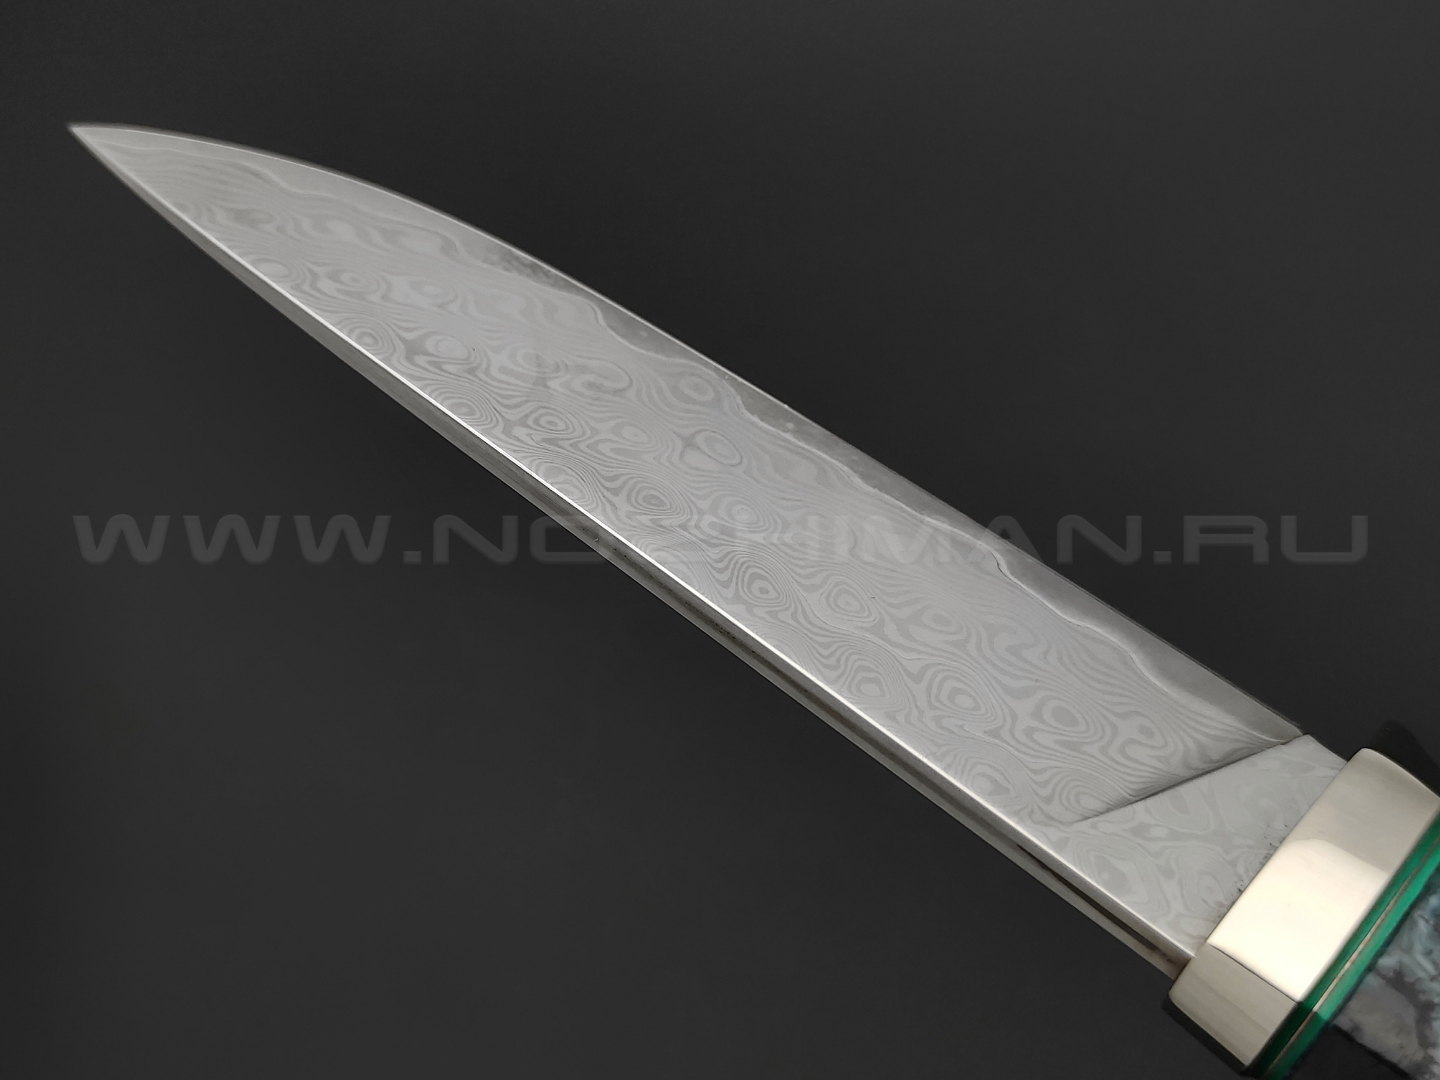 Кузница Васильева нож "НЛВ114" ламинат M390, рукоять карелка, нейзильбер, зуб мамонта